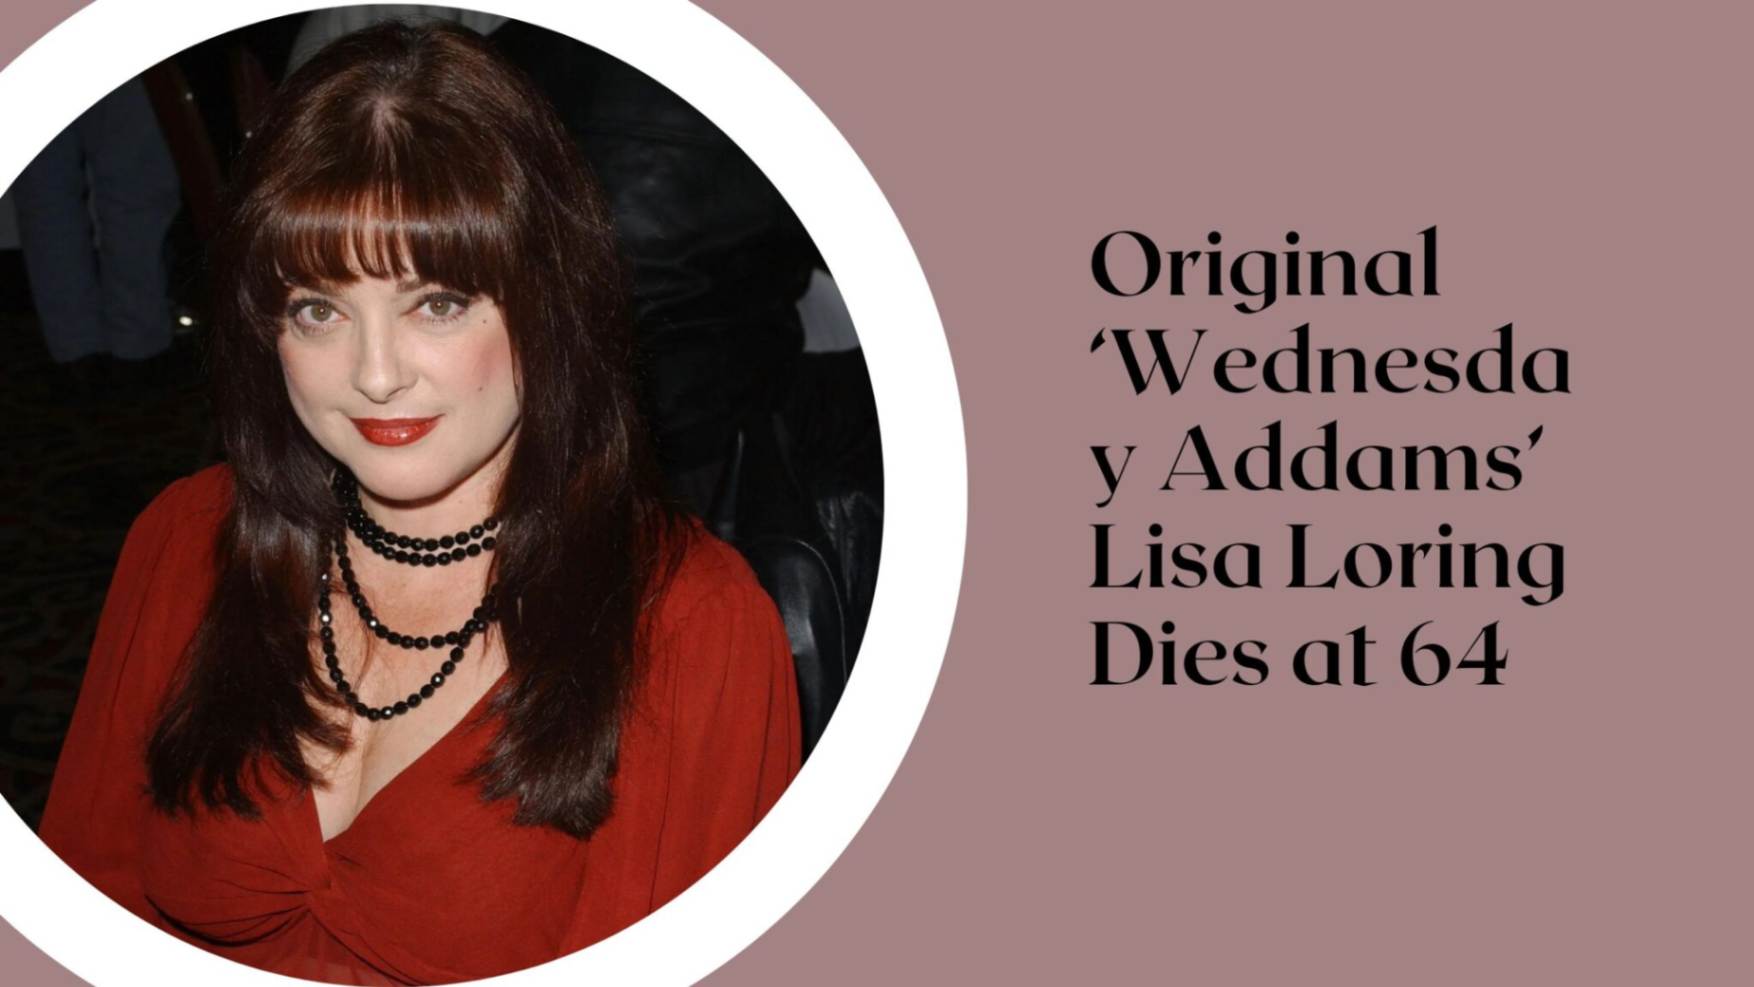 Original ‘Wednesday Addams’ Lisa Loring Dies at 64